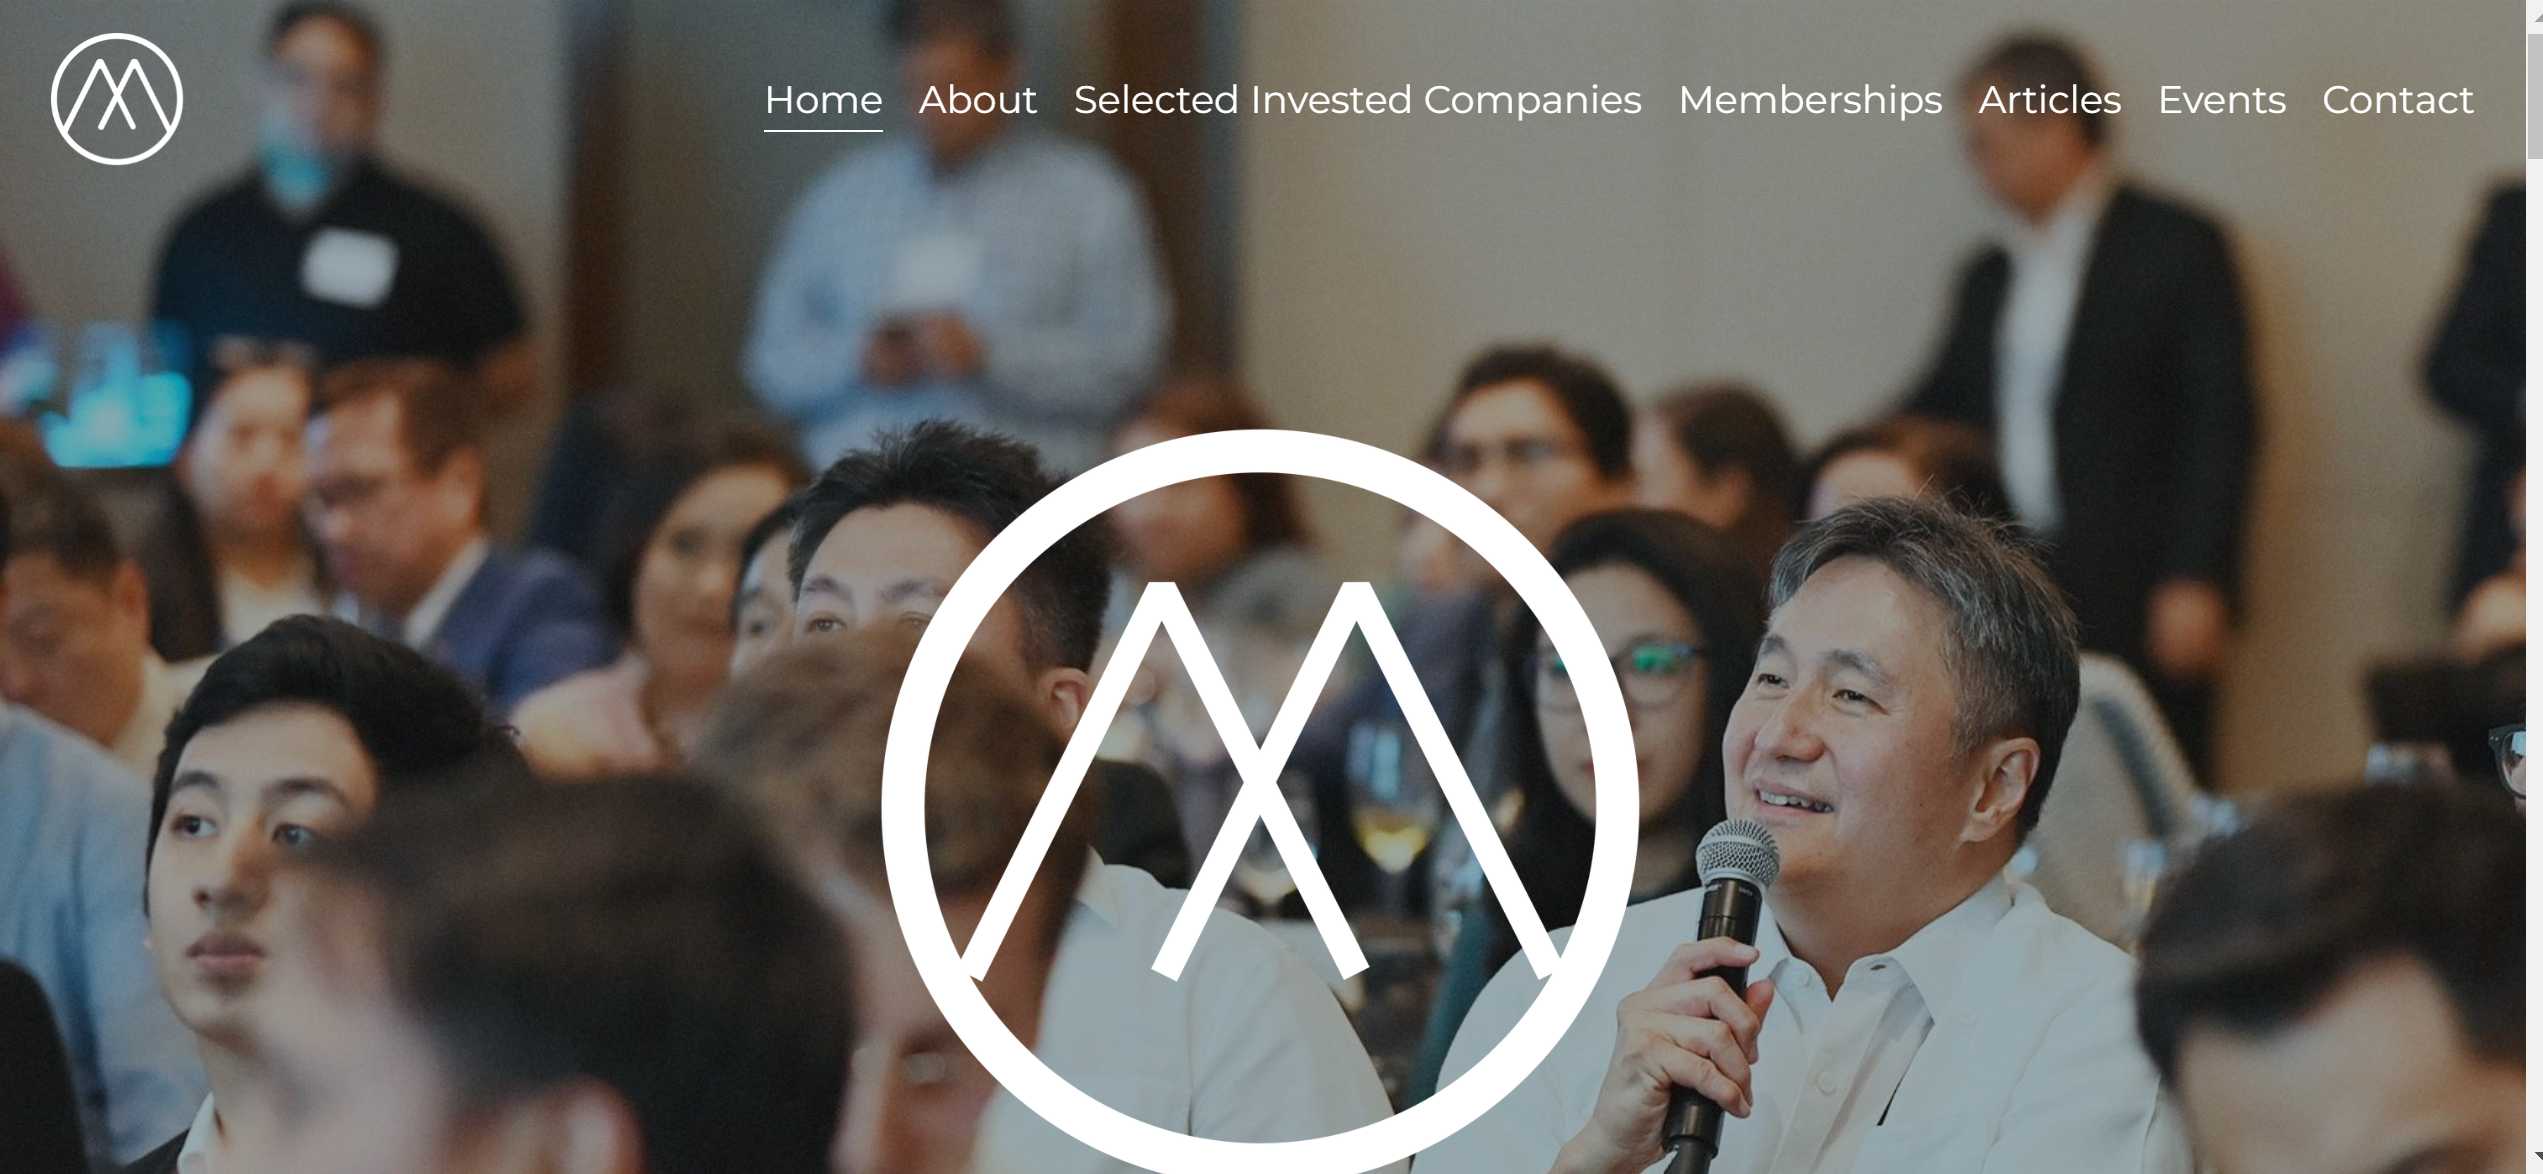 Manila Angel Investors Network